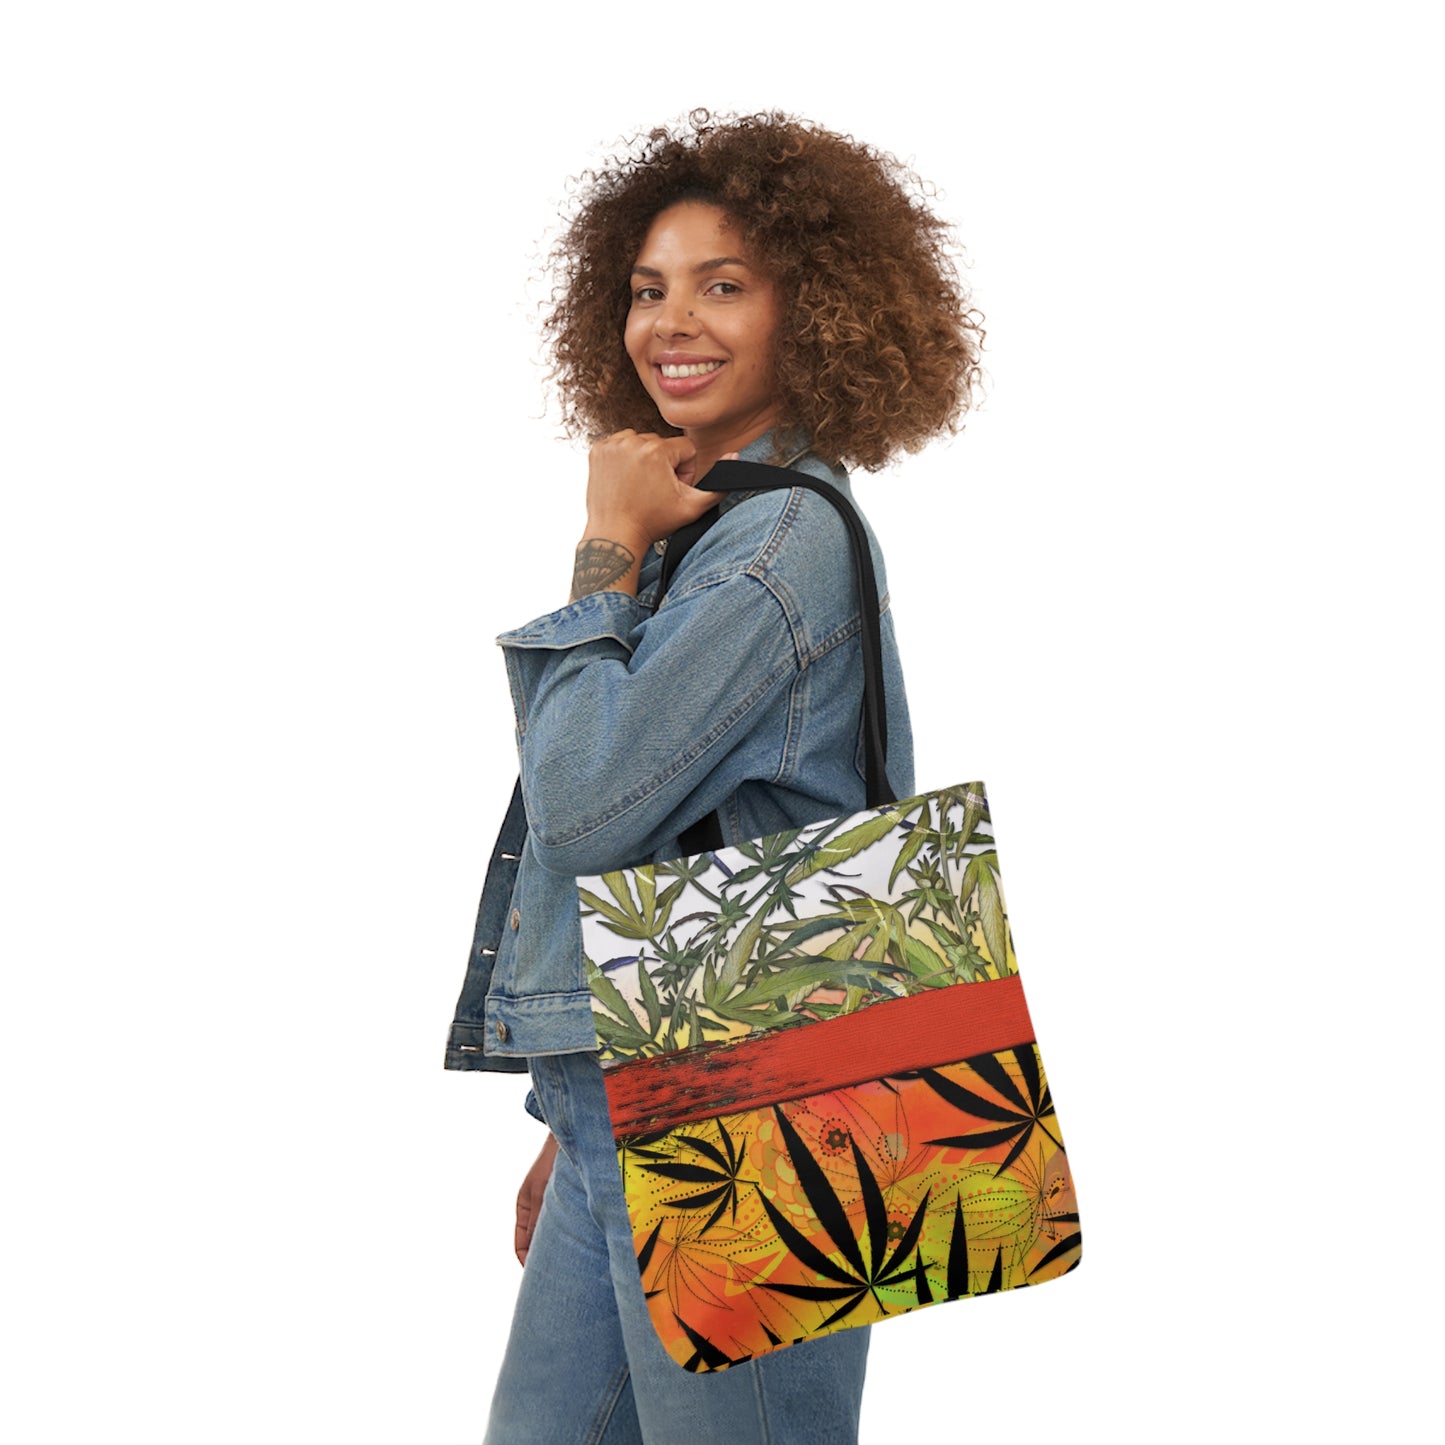 Beautiful Redish Orange Banded Marijuana 420 Pot Weed Leaf Polyester Canvas Tote Bag (AOP)